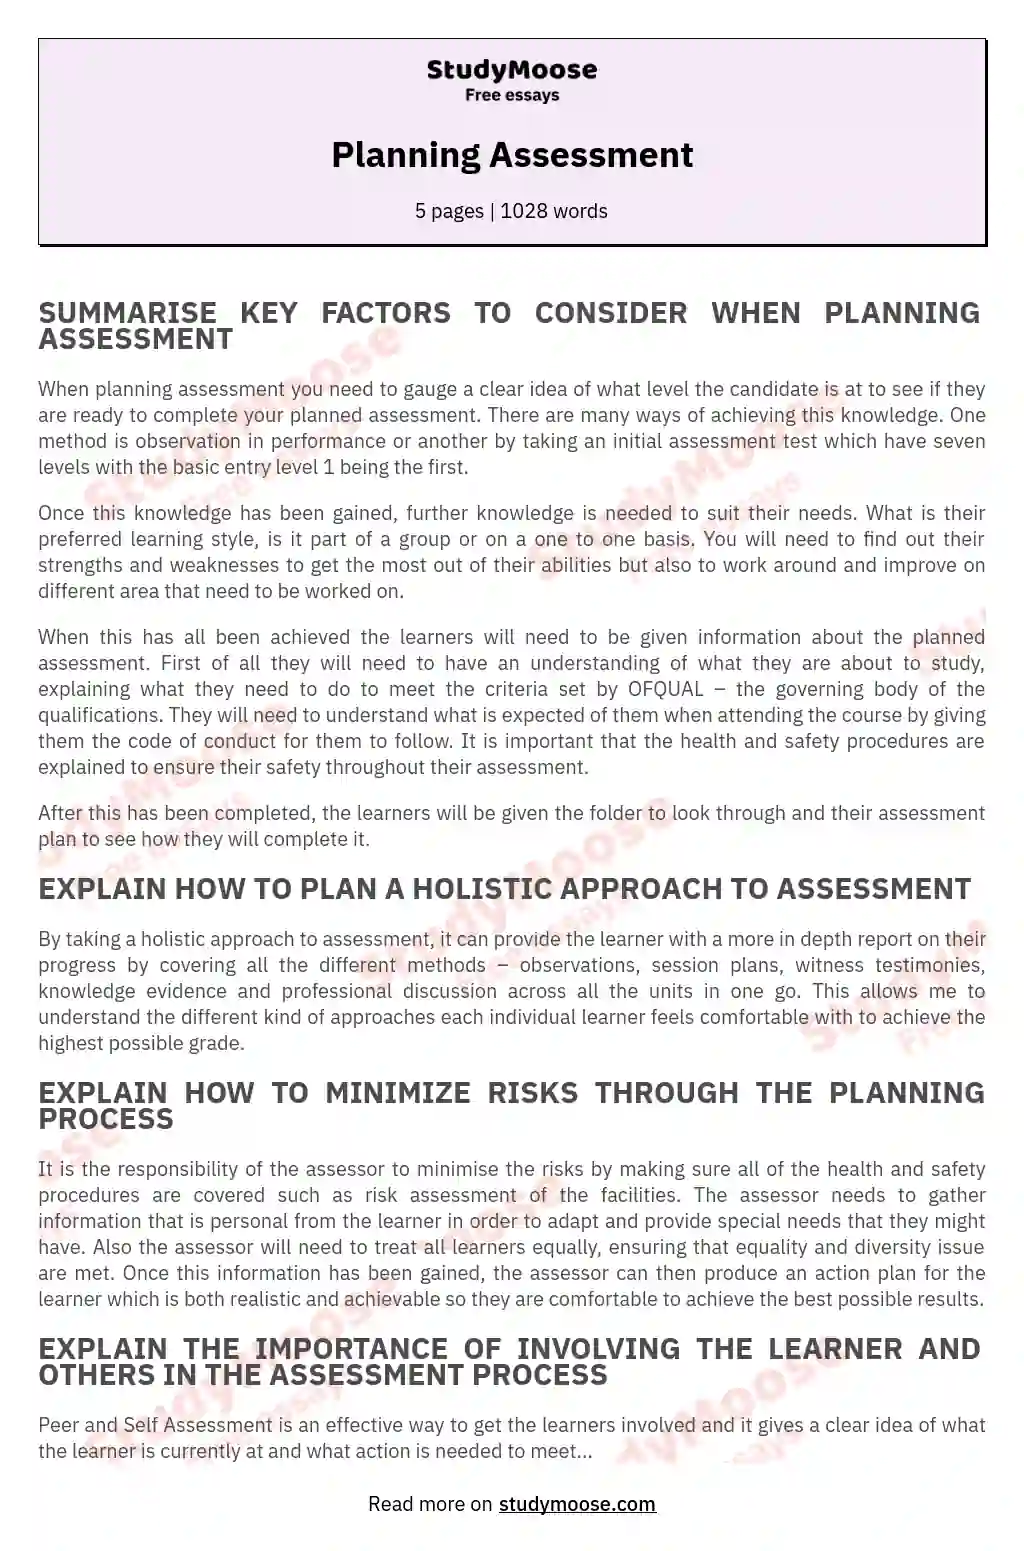 Planning Assessment essay